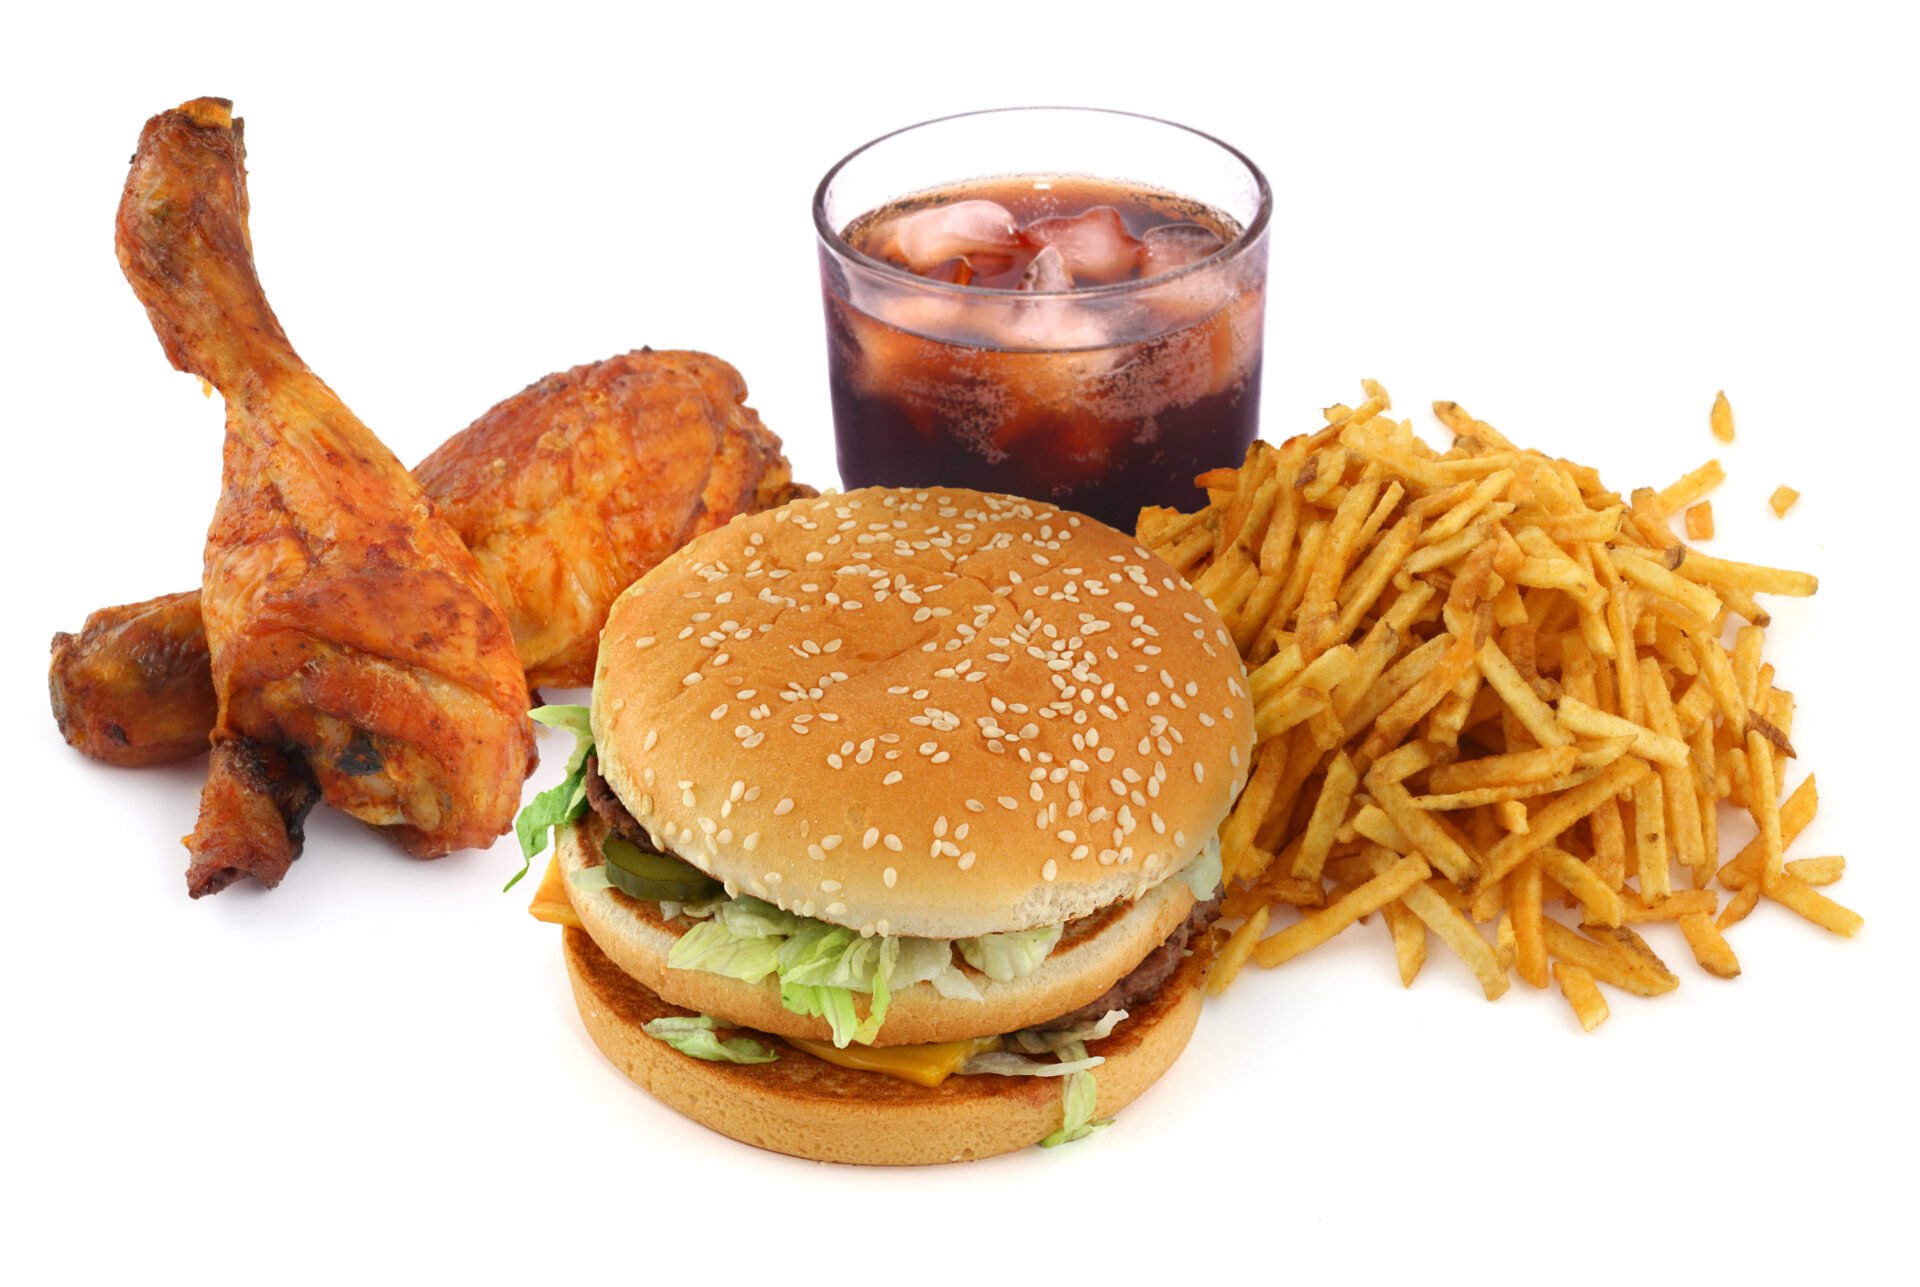 Burger, fries, coke, and buffalo wings without PFAS